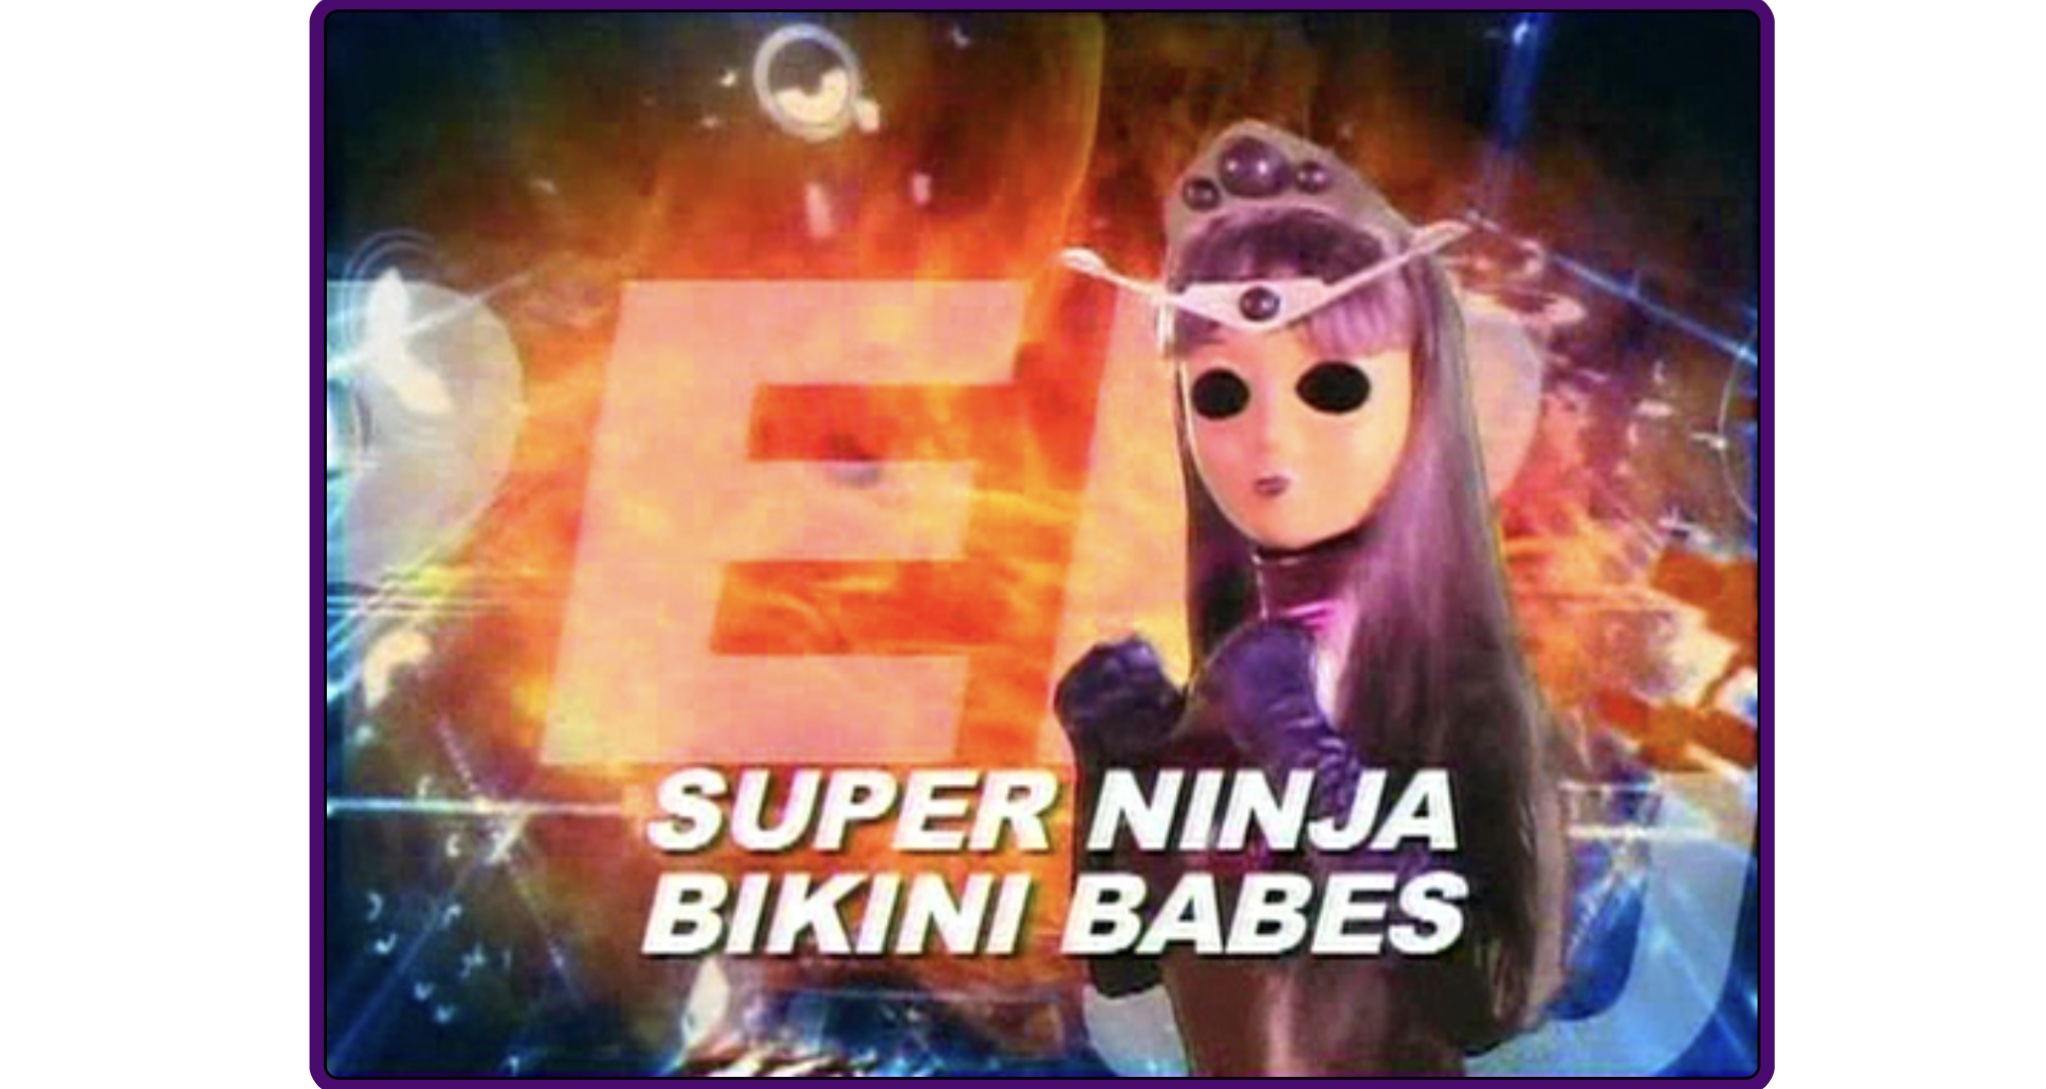 dante tucker recommends Super Ninja Doll Movie